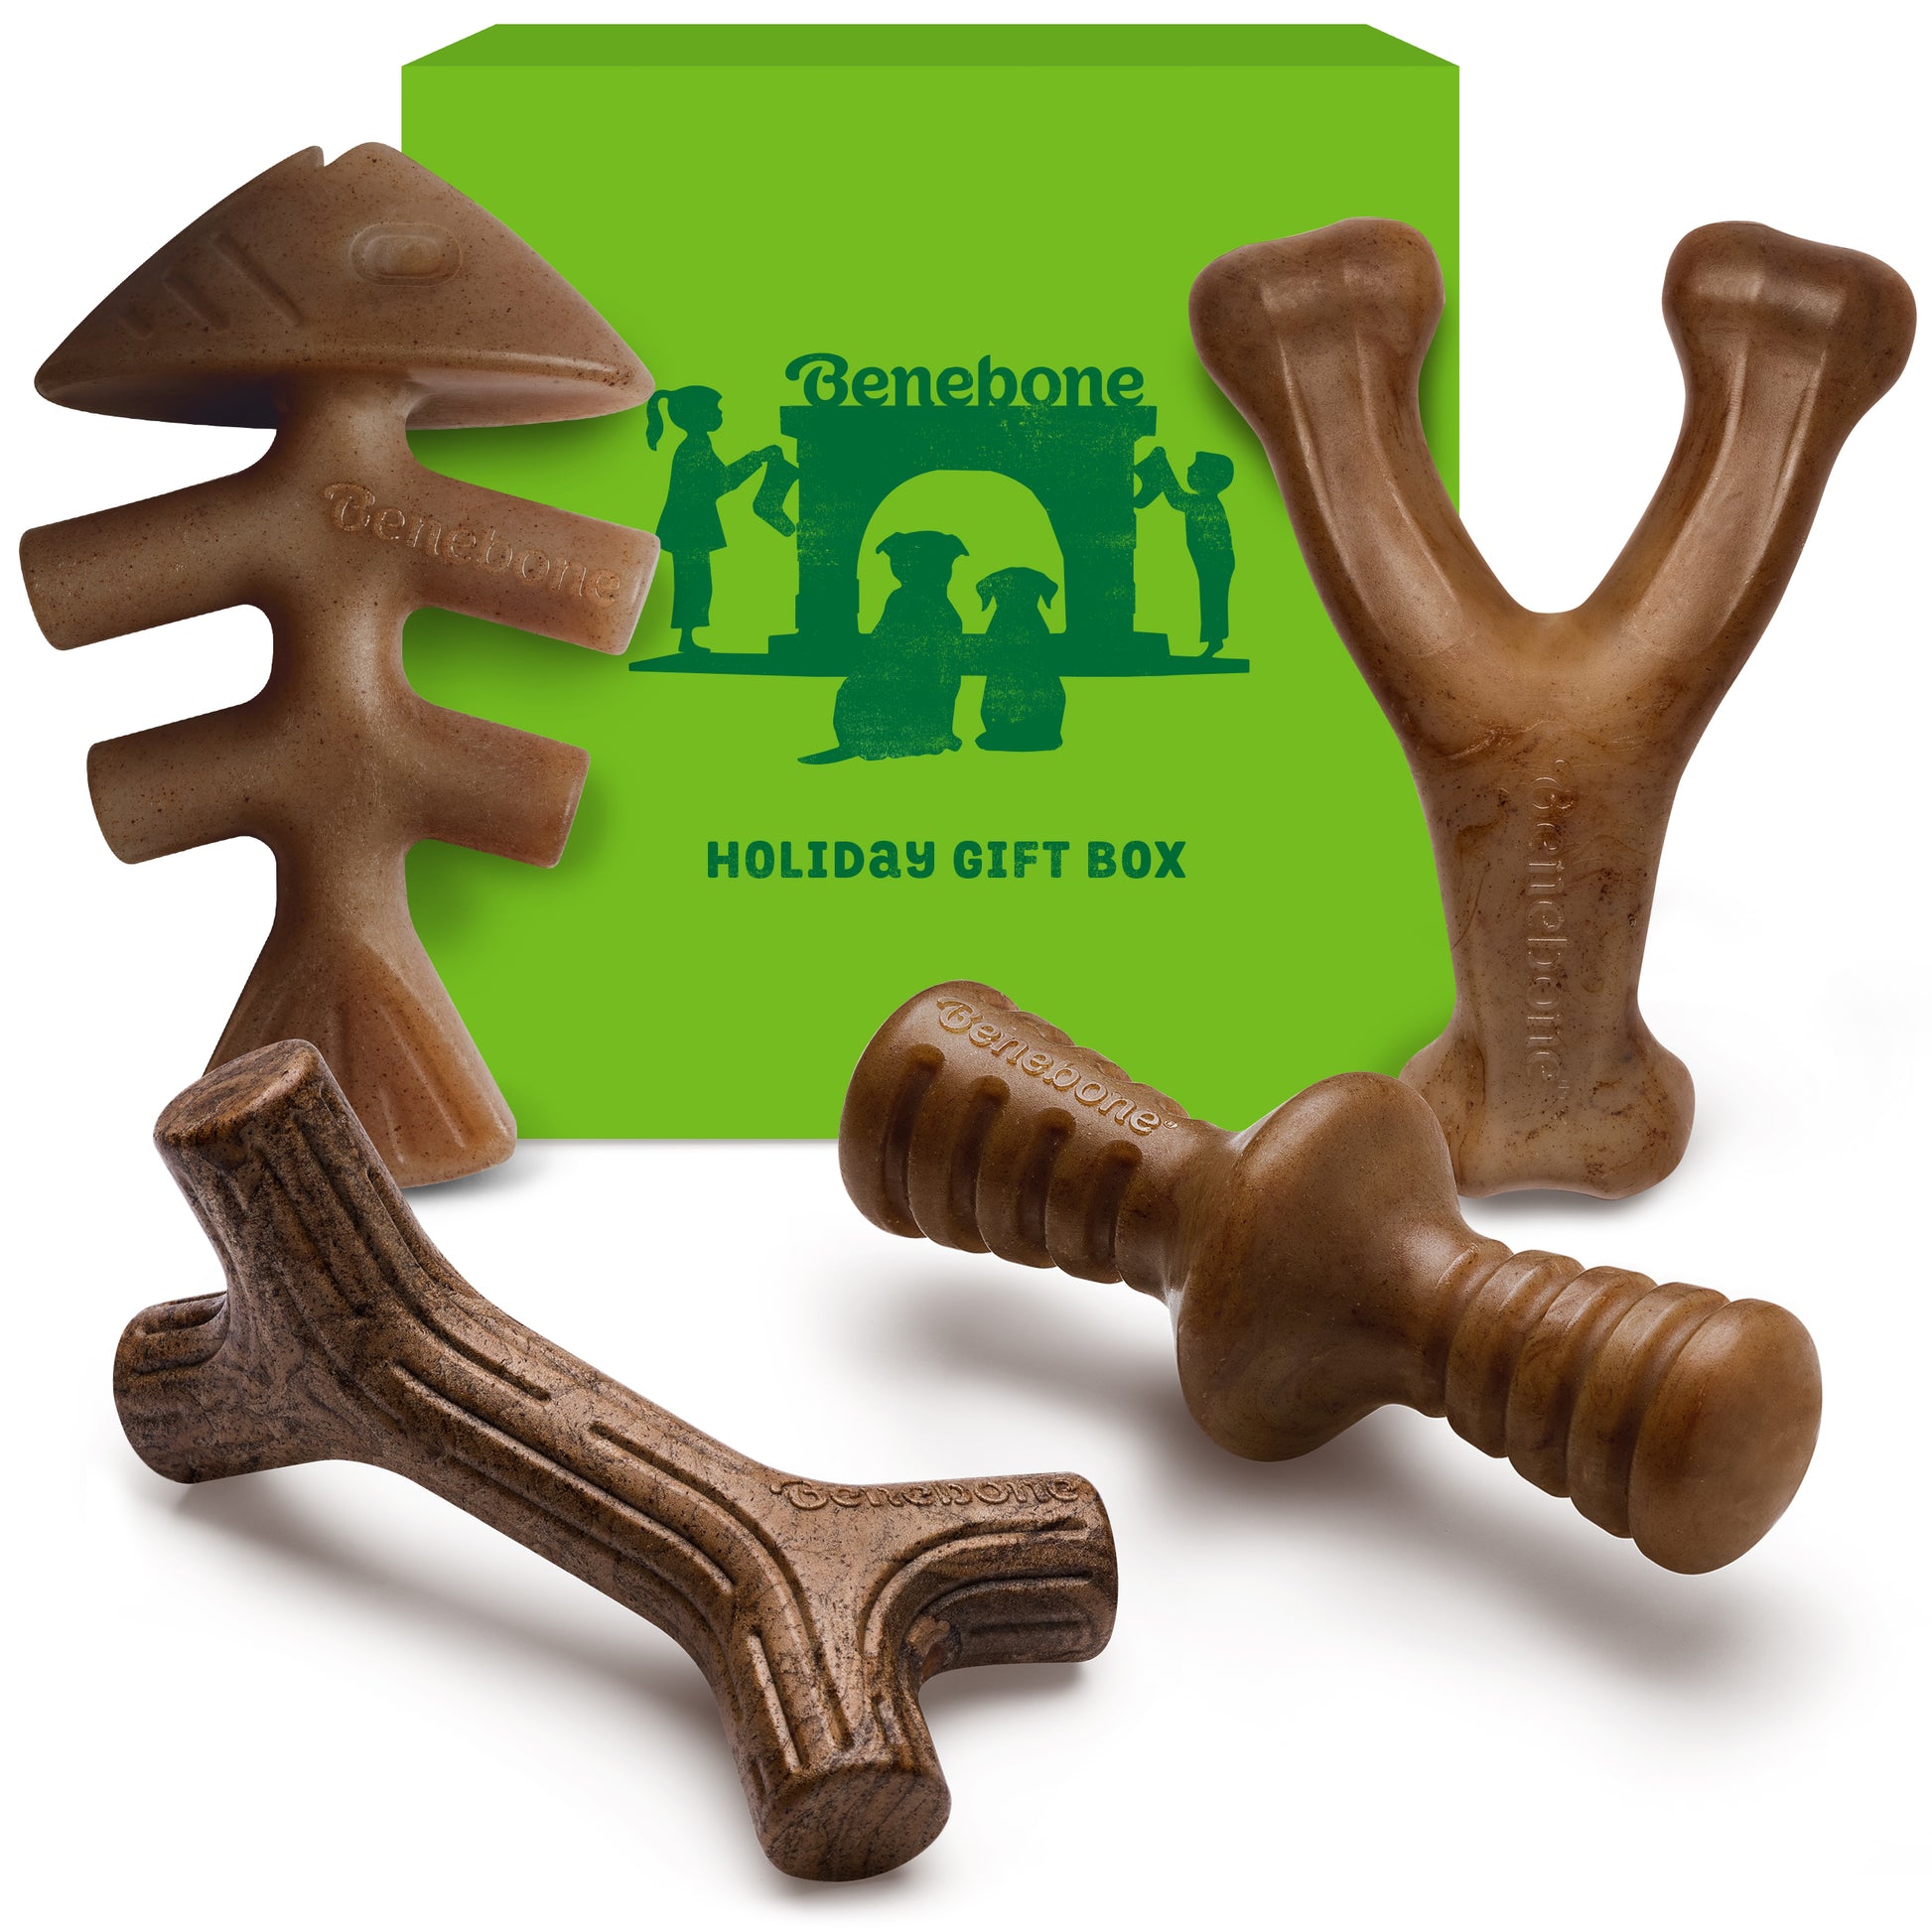 Benebone holiday gift box with wishbone, maplestick, fishbone and rubber zaggler